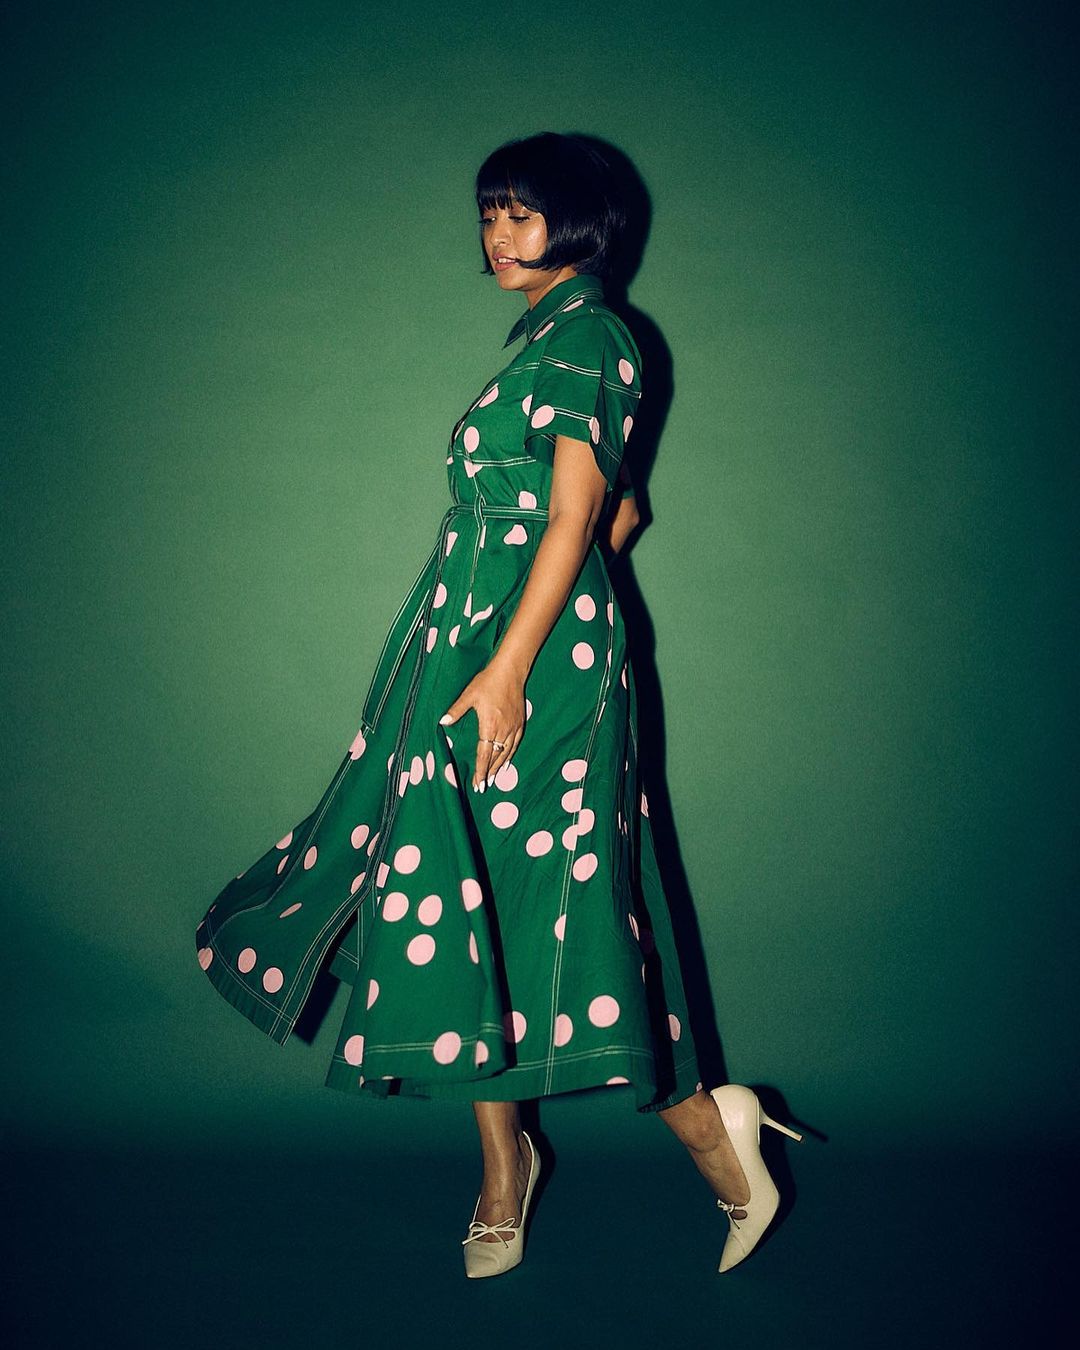 Sayani Gupta looks smart in a polka-dotted green midi dress